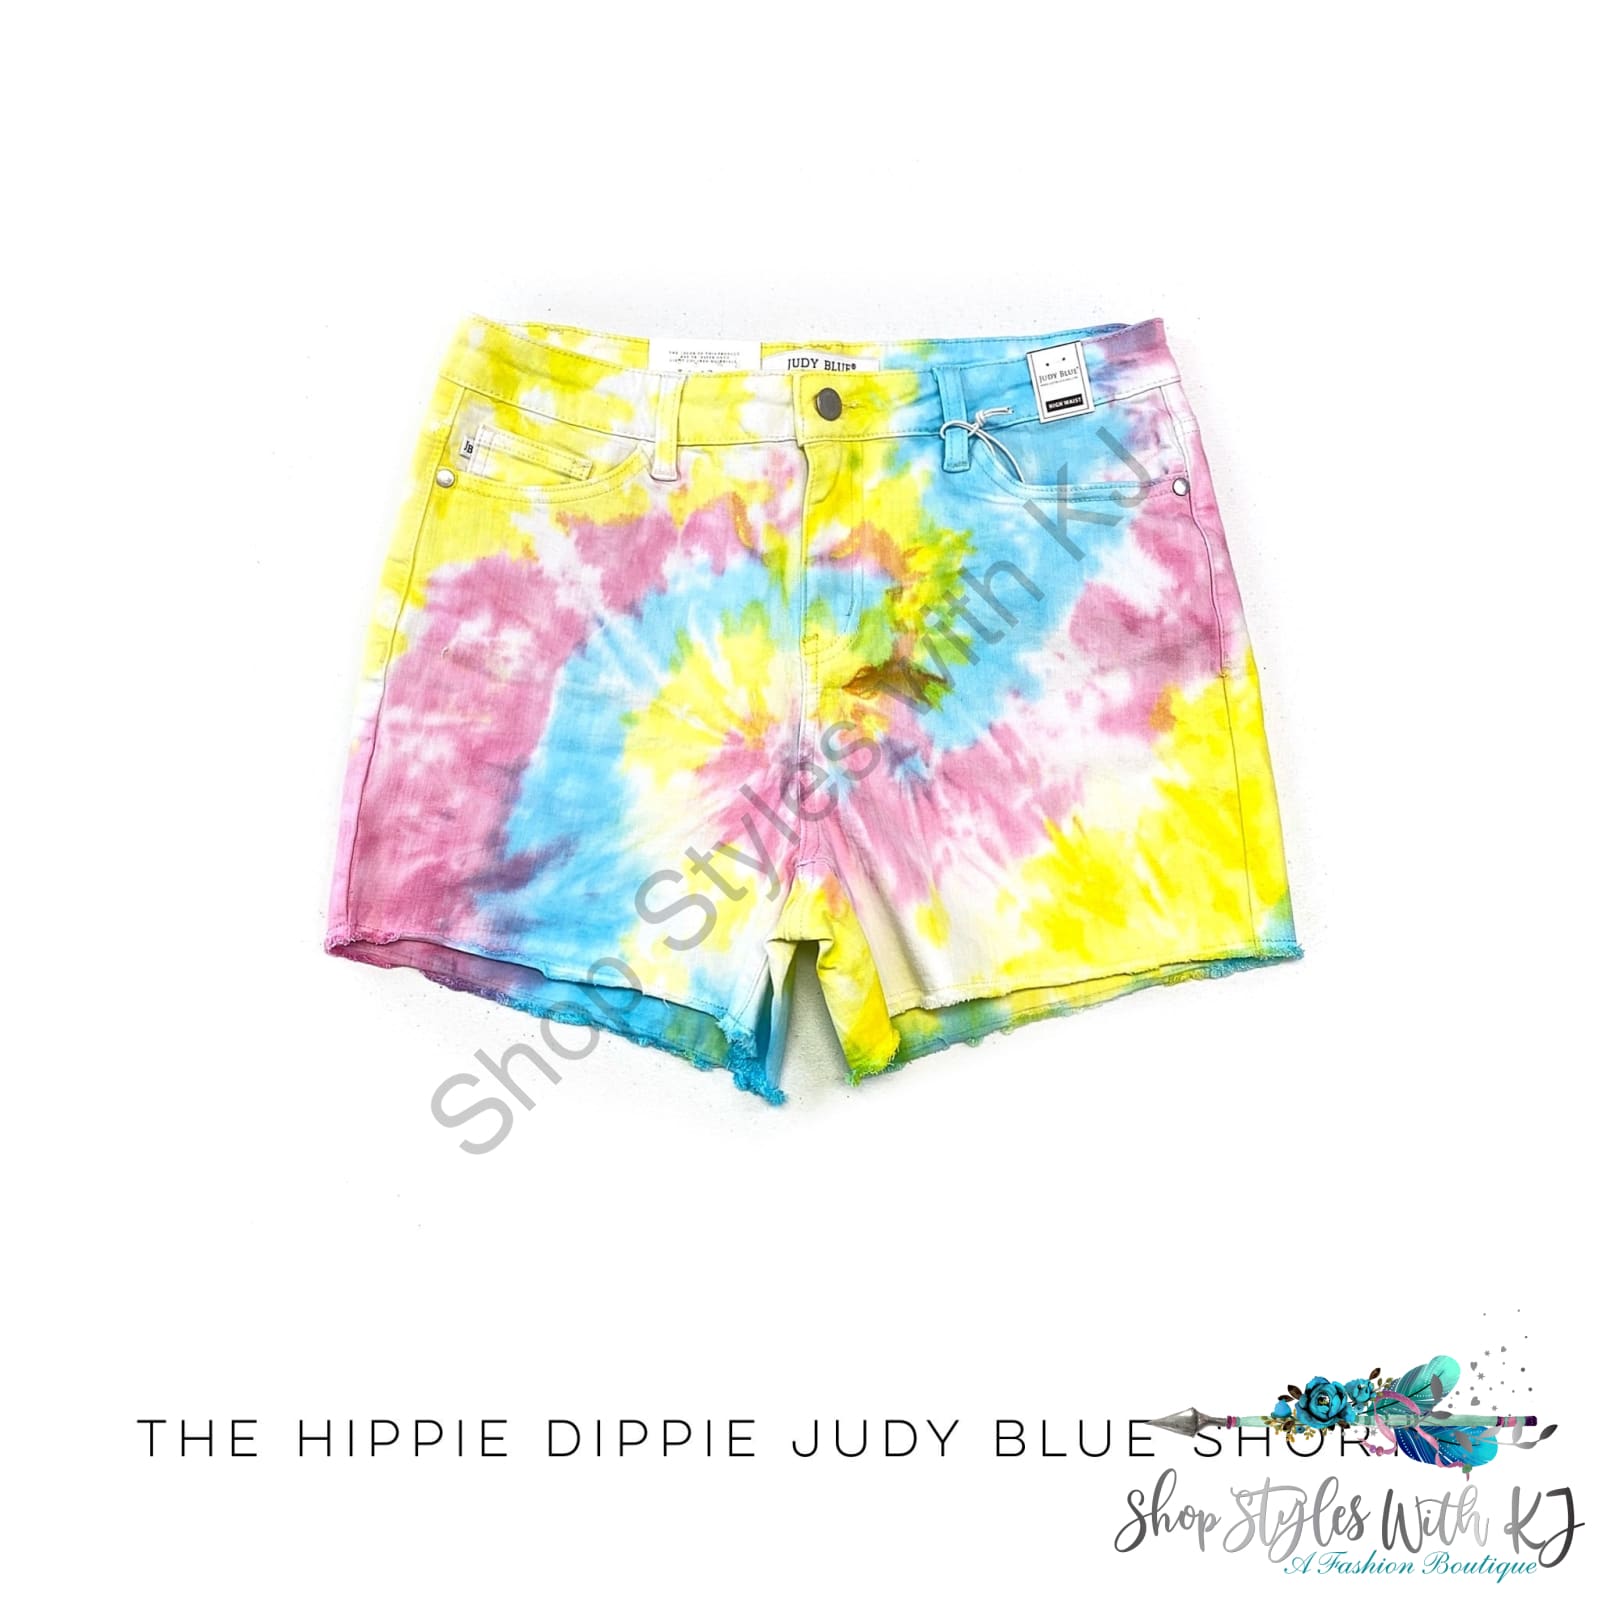 The Hippie Dippie Judy Blue Shorts Judy Blue